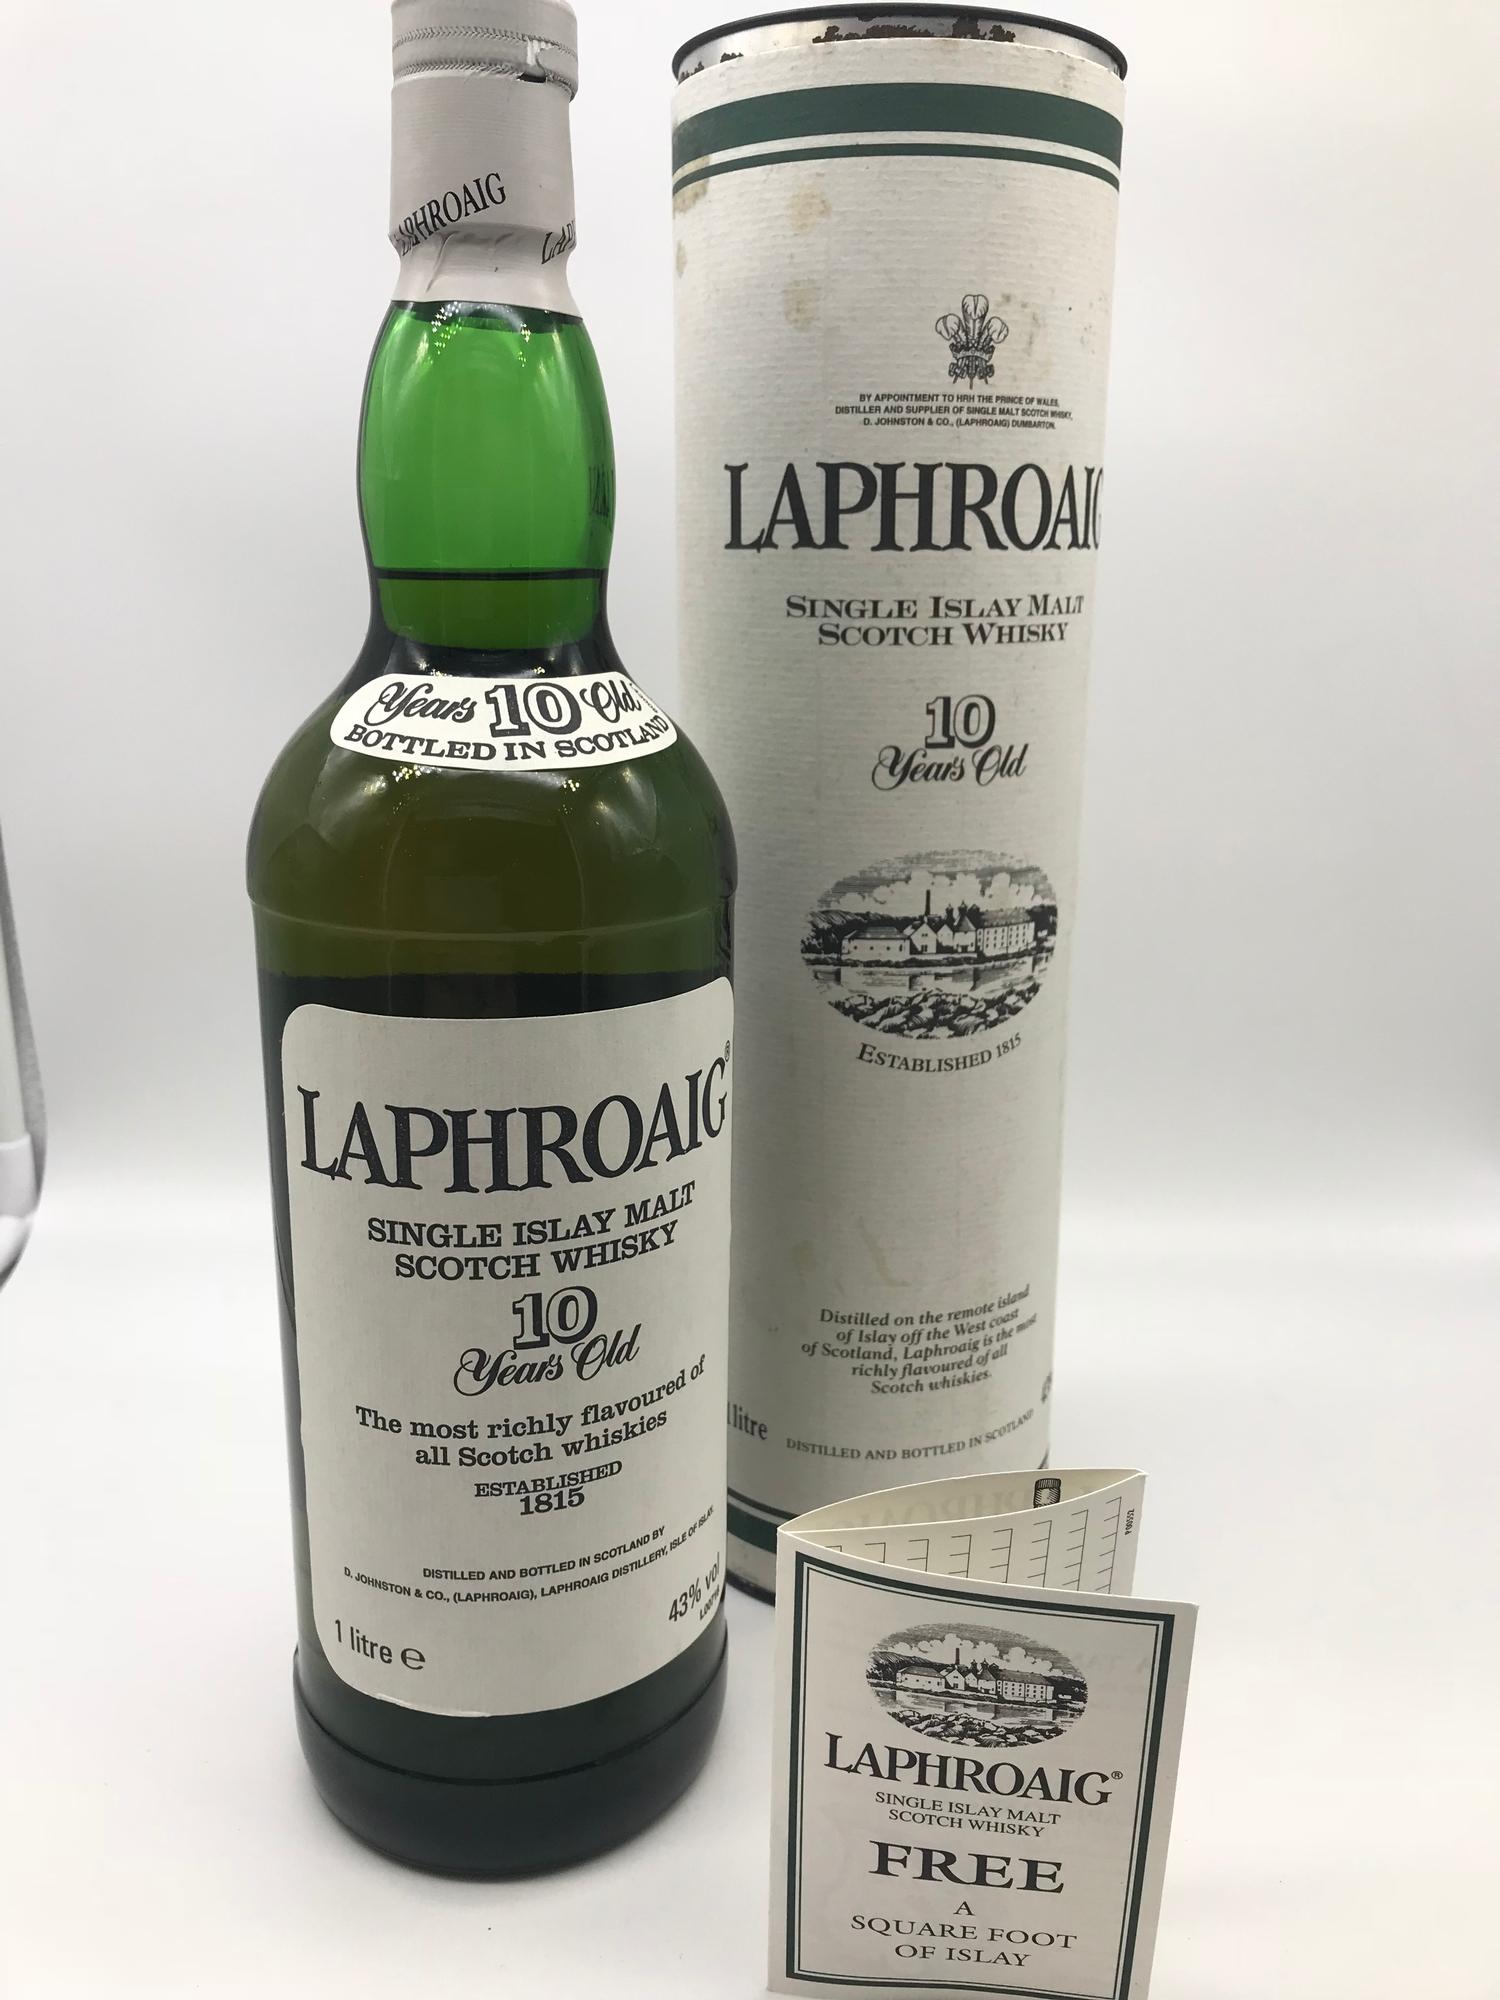 Laphroaig 10 year old single Islay malt Scotch Whisky, 1 Litre, Full, sealed & Boxed.